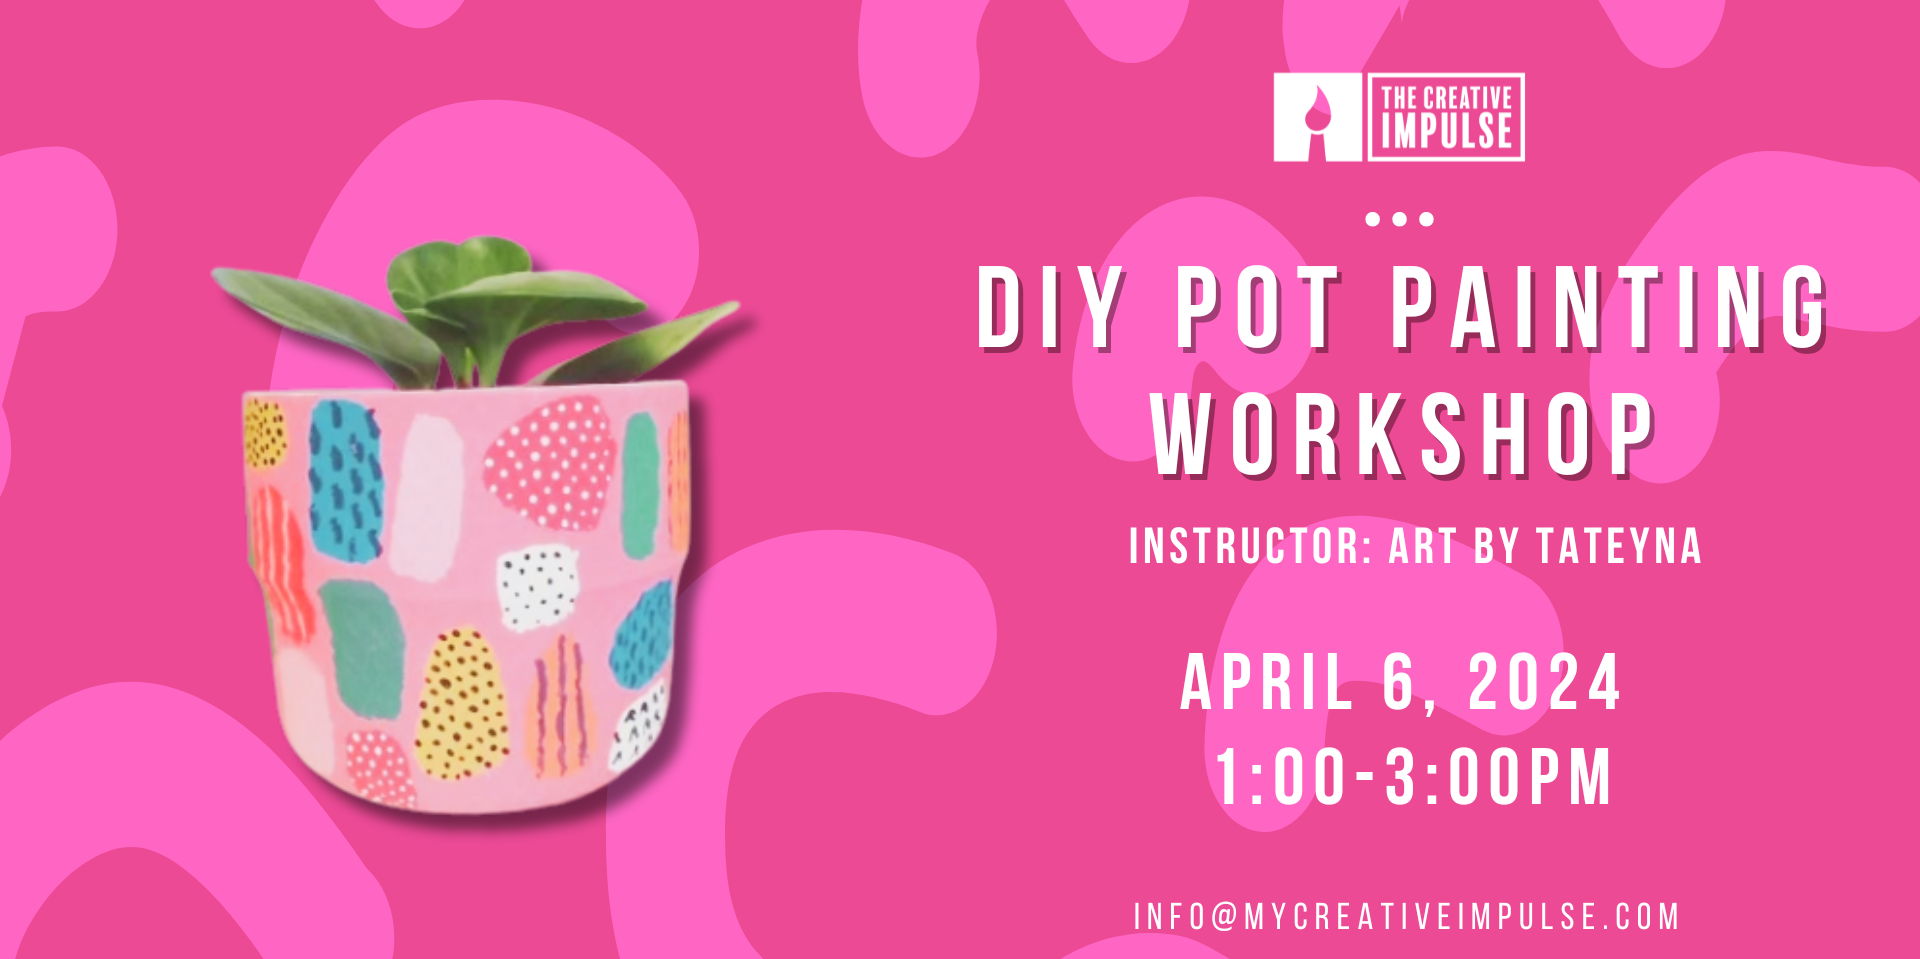 DIY Pot Painting Workshop promotional image